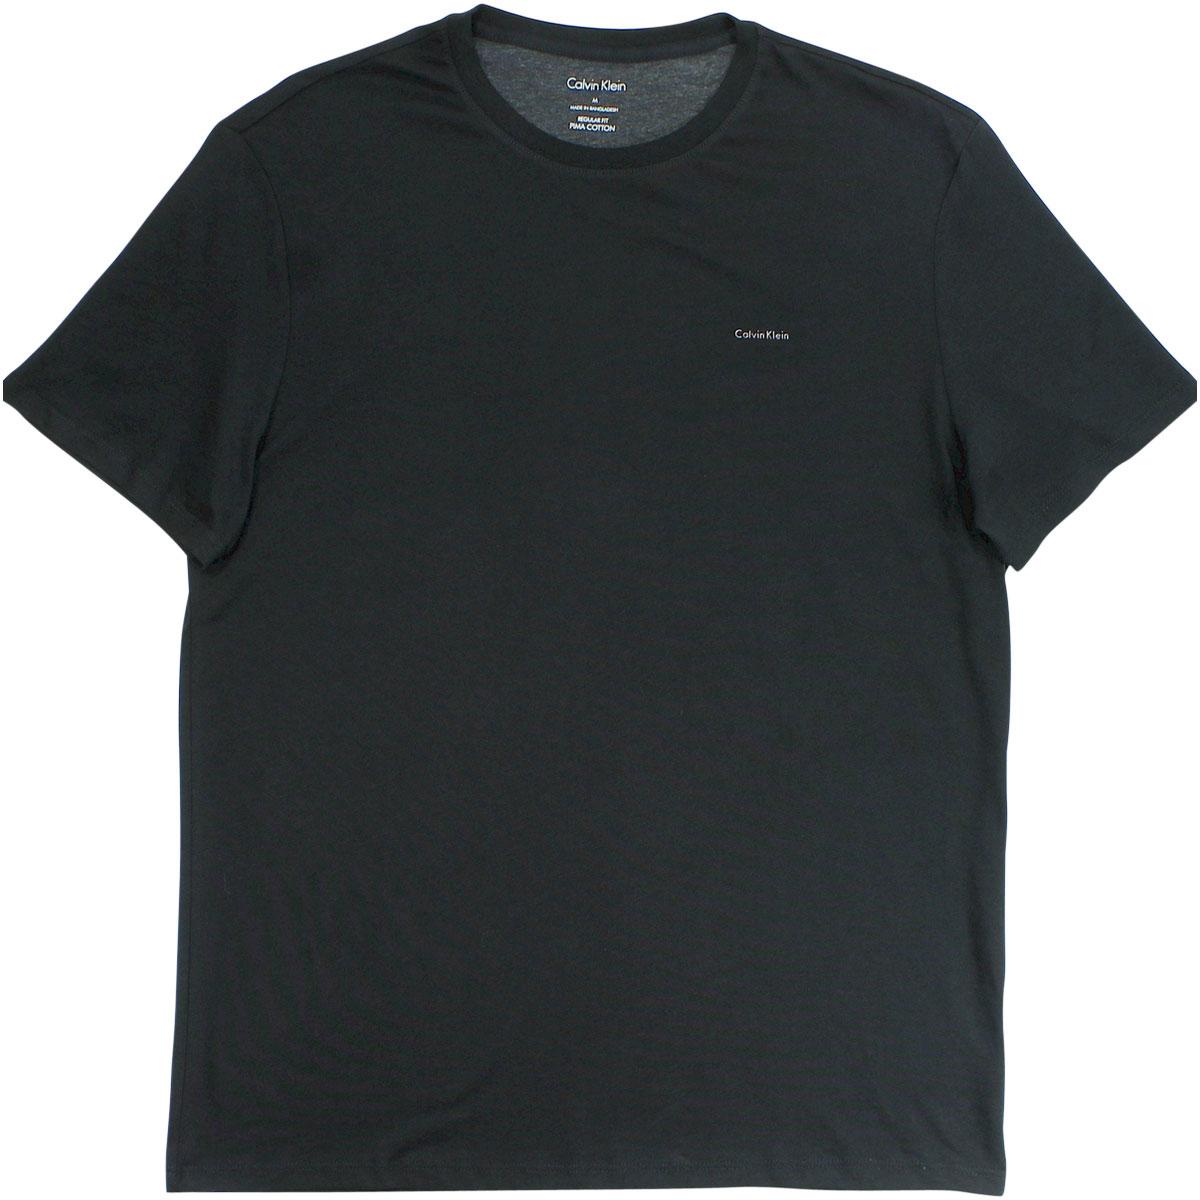 Calvin Klein's Men's Cotton Crew Neck Short Sleeve T Shirt - Black - Large